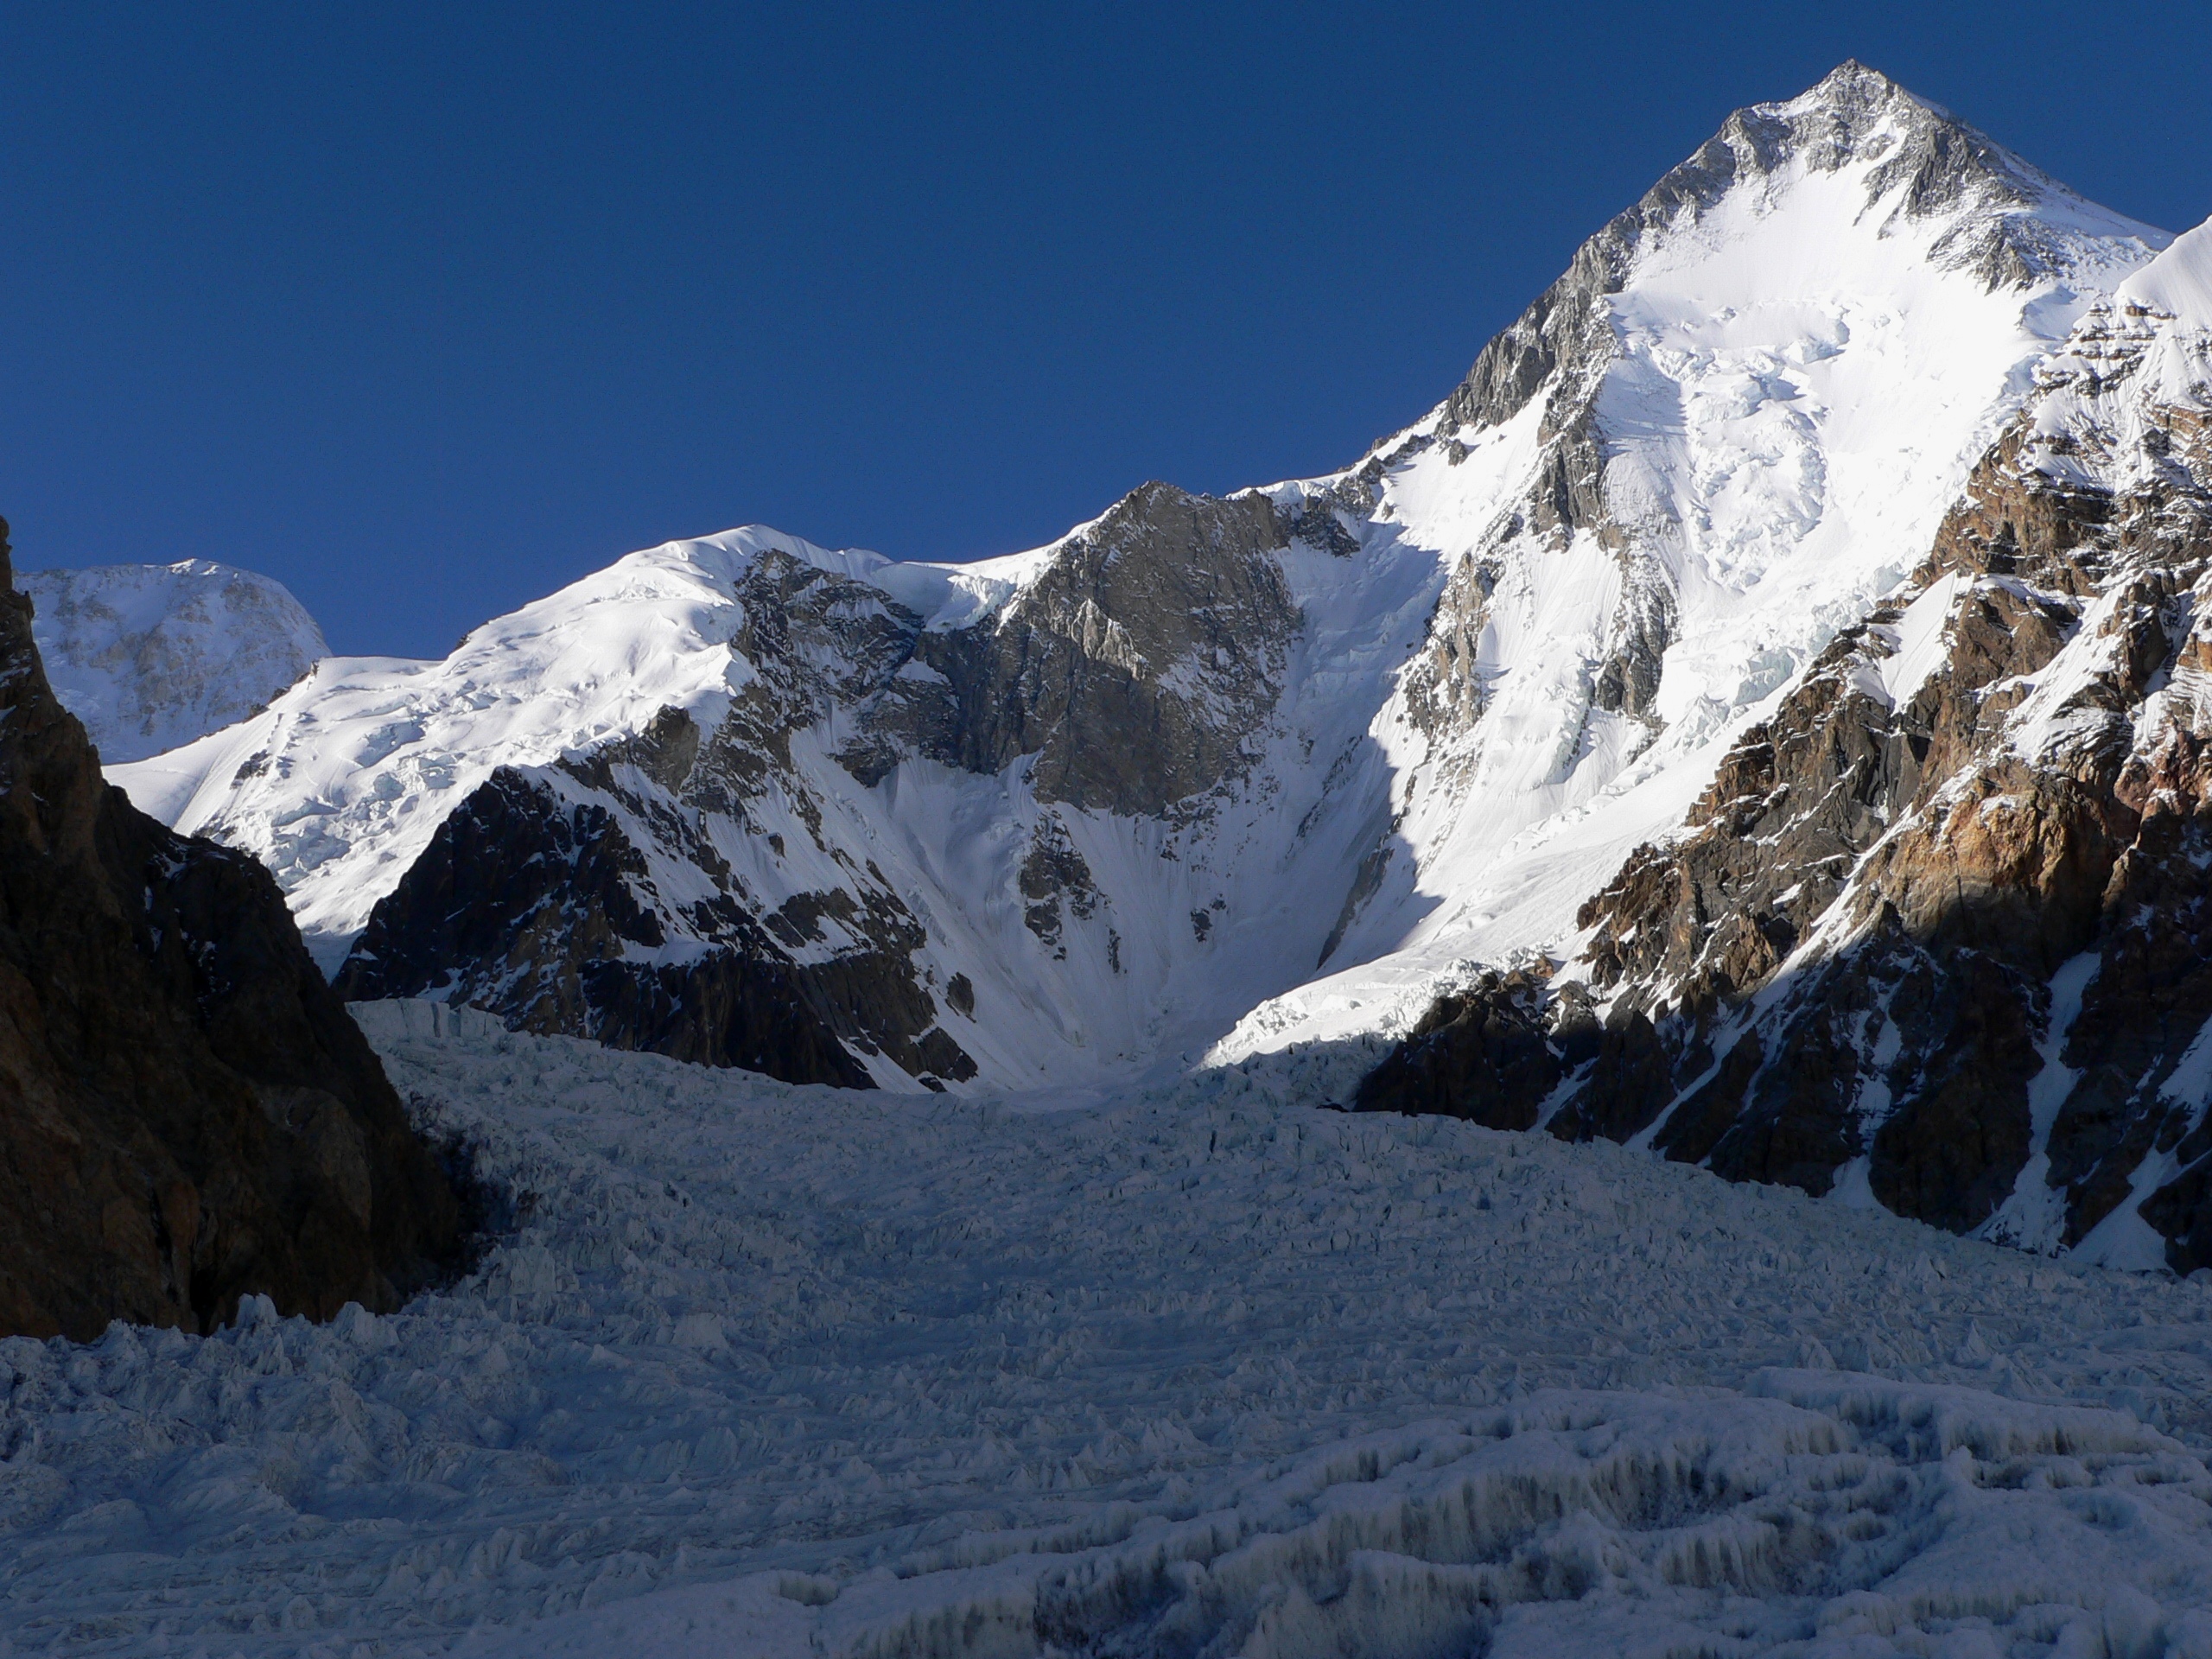 The southwest face of Gasherbrum as seen from base camp. [Photo] Marek Holecek